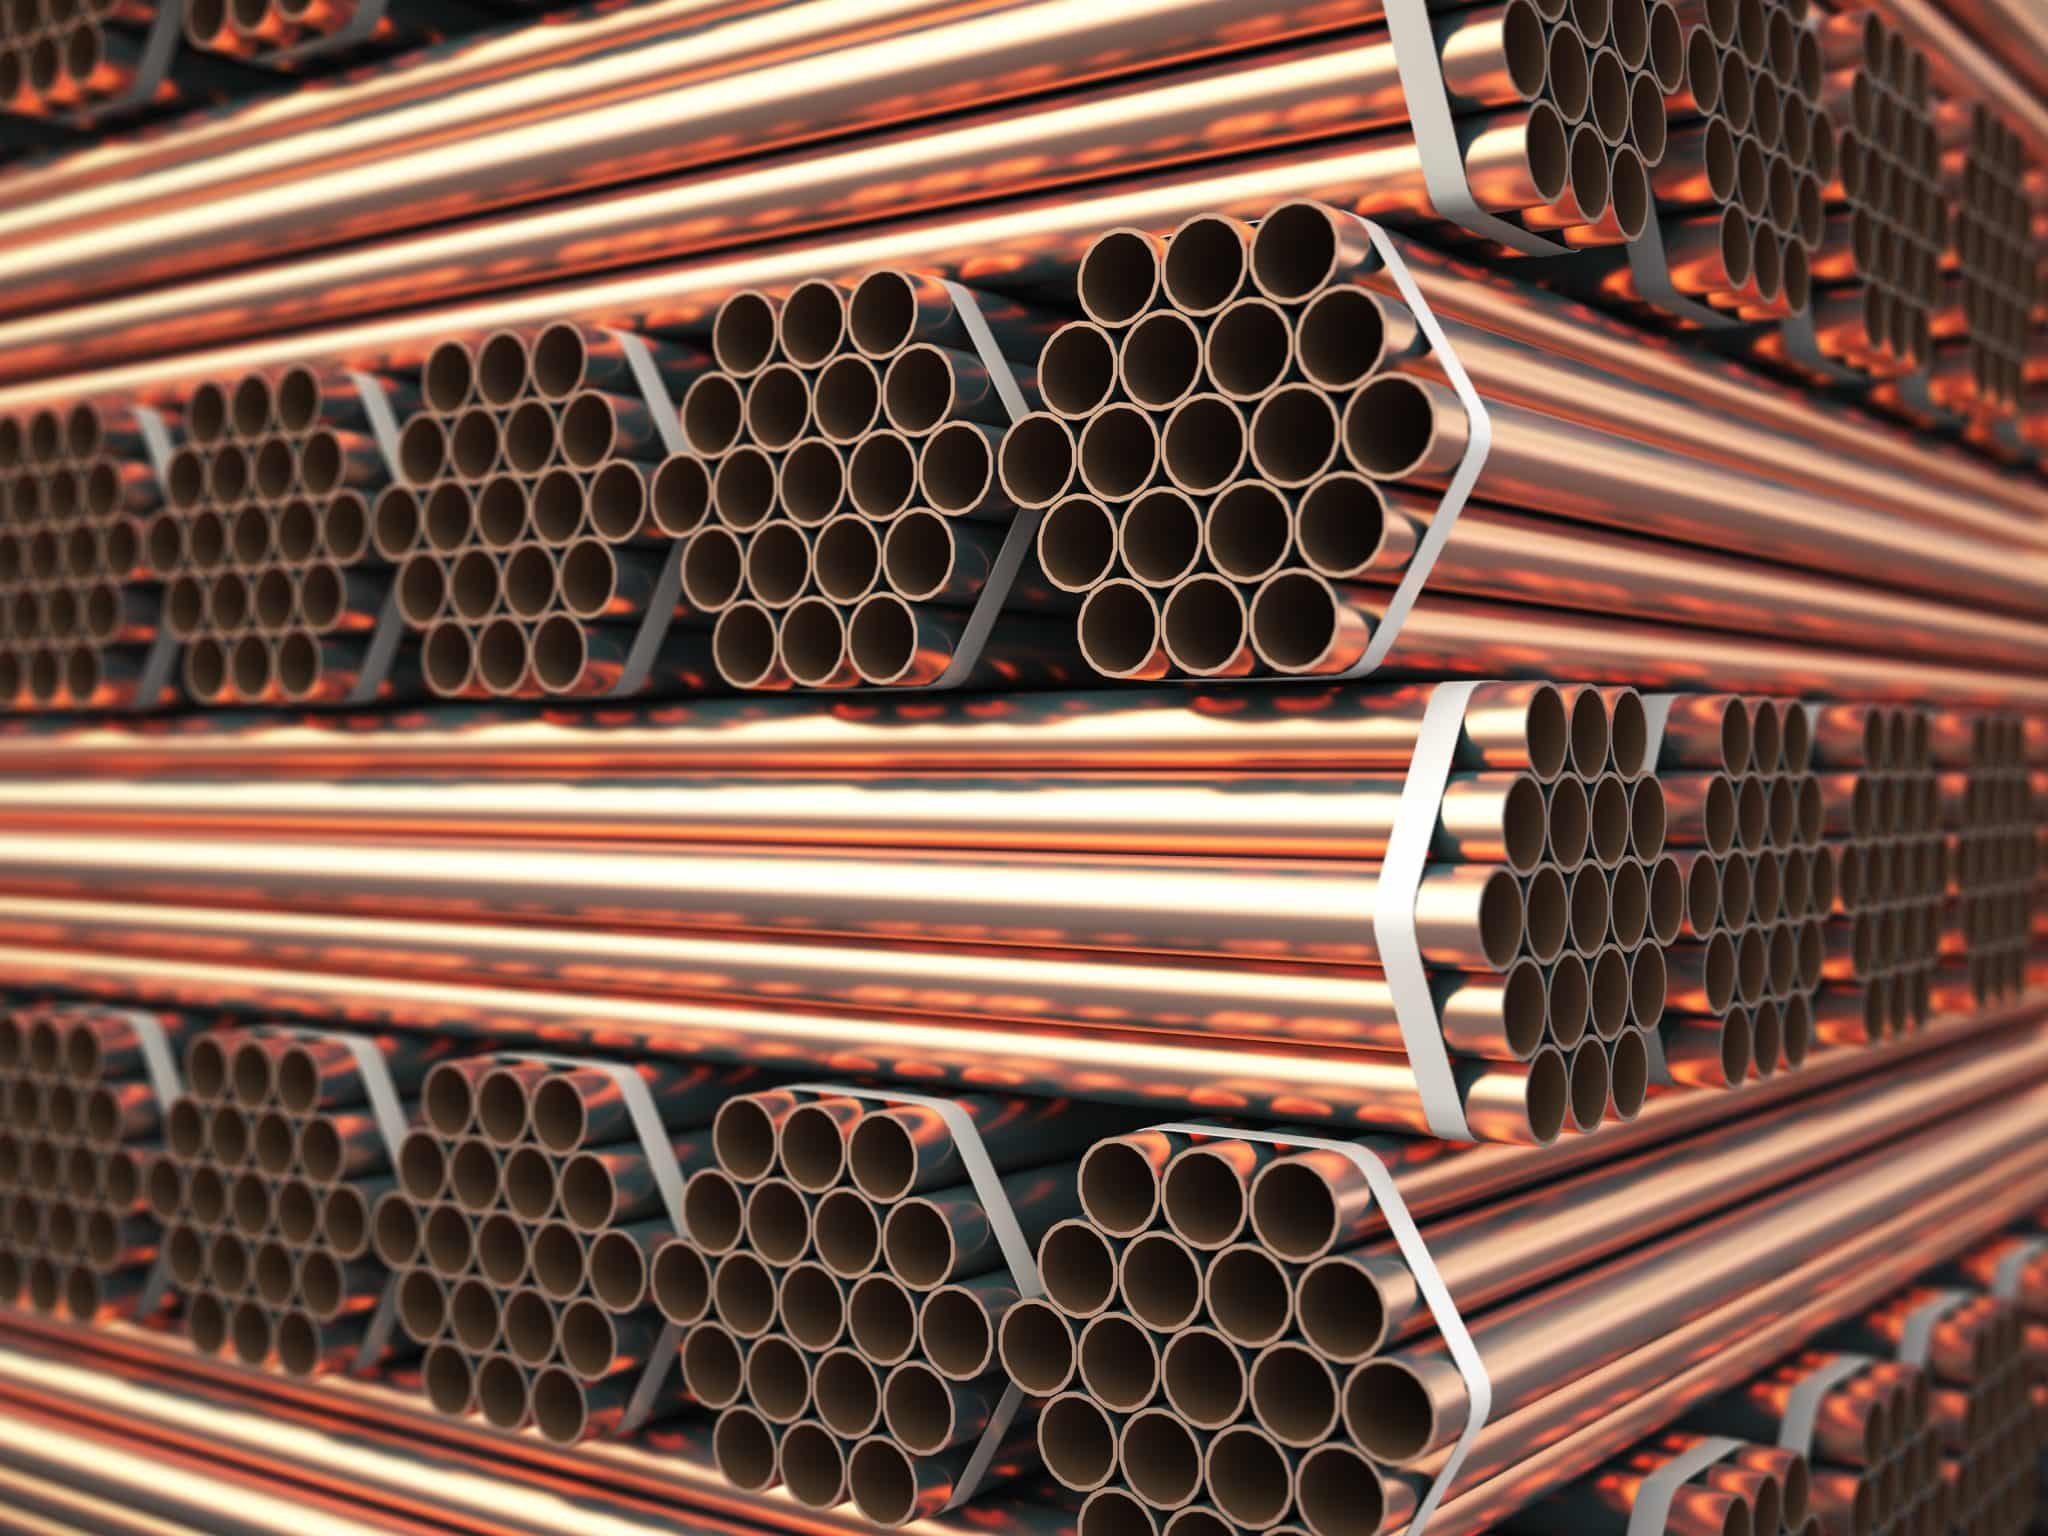 Copper or bronze metal pipes in warehouse. Heavy non-ferrous met